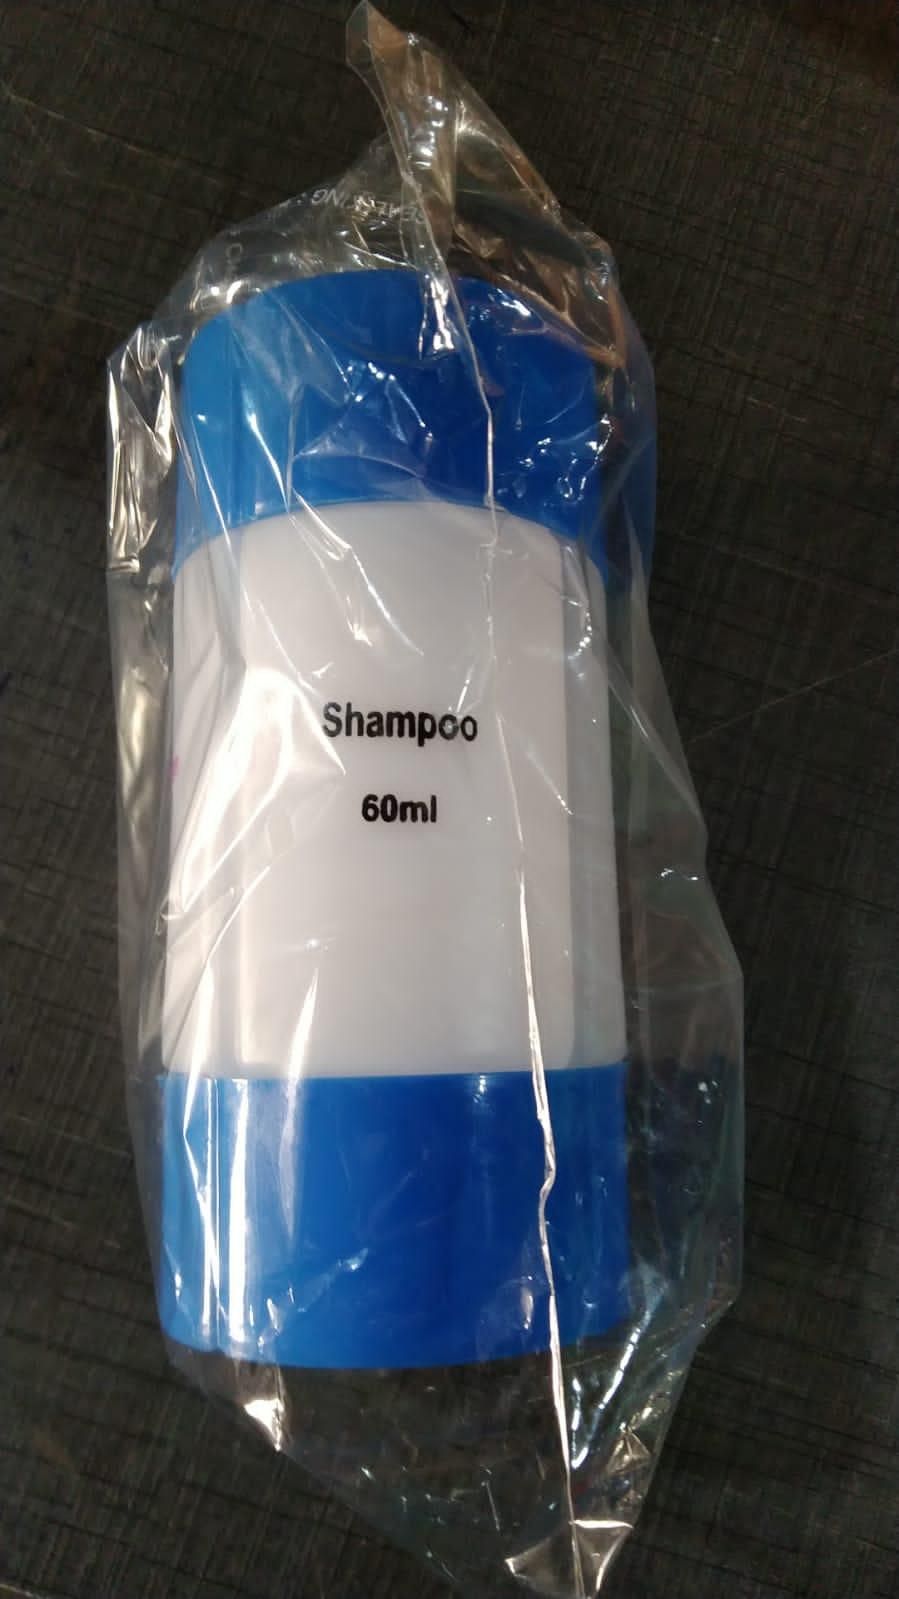 4 in 1 Toiletries Body Wash Shampoo Lotion Dispenser